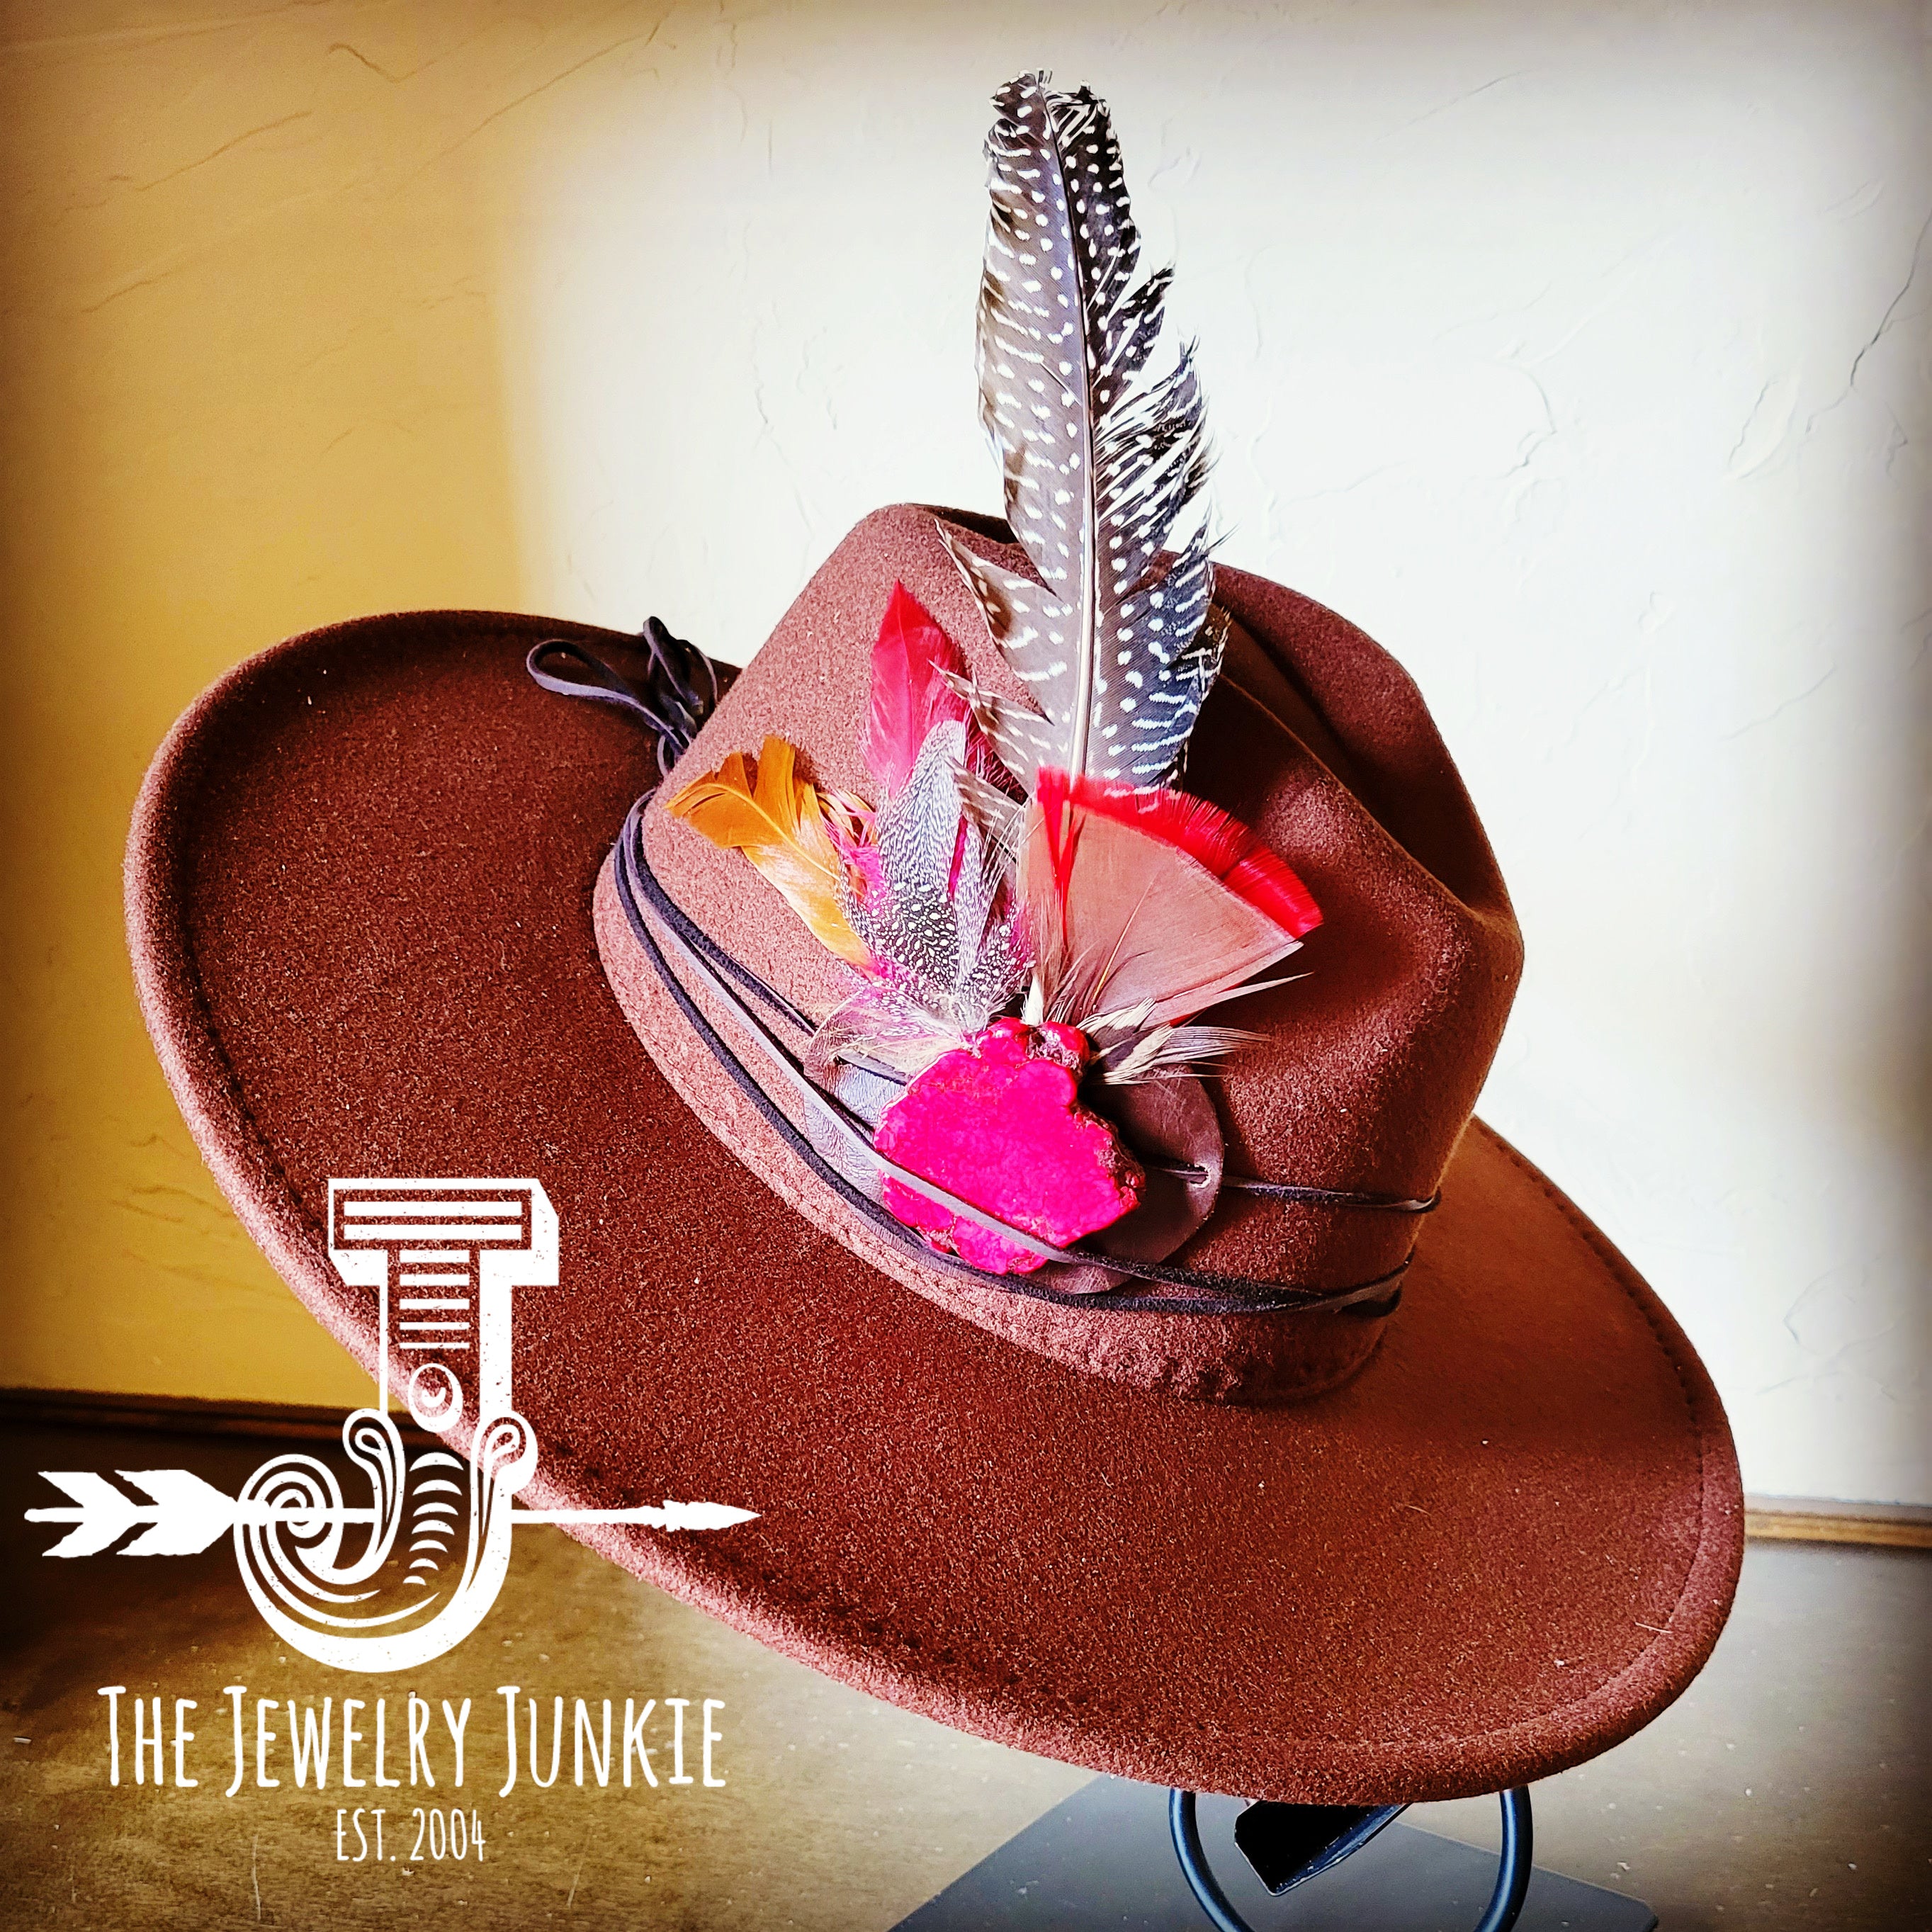 QuneusHot 8 Piece Cowboy Leather Hat Band Natural Hat Feathers Long Horn Turquoise Hatbands for Western Fedora Pork Pie Hats Men Women